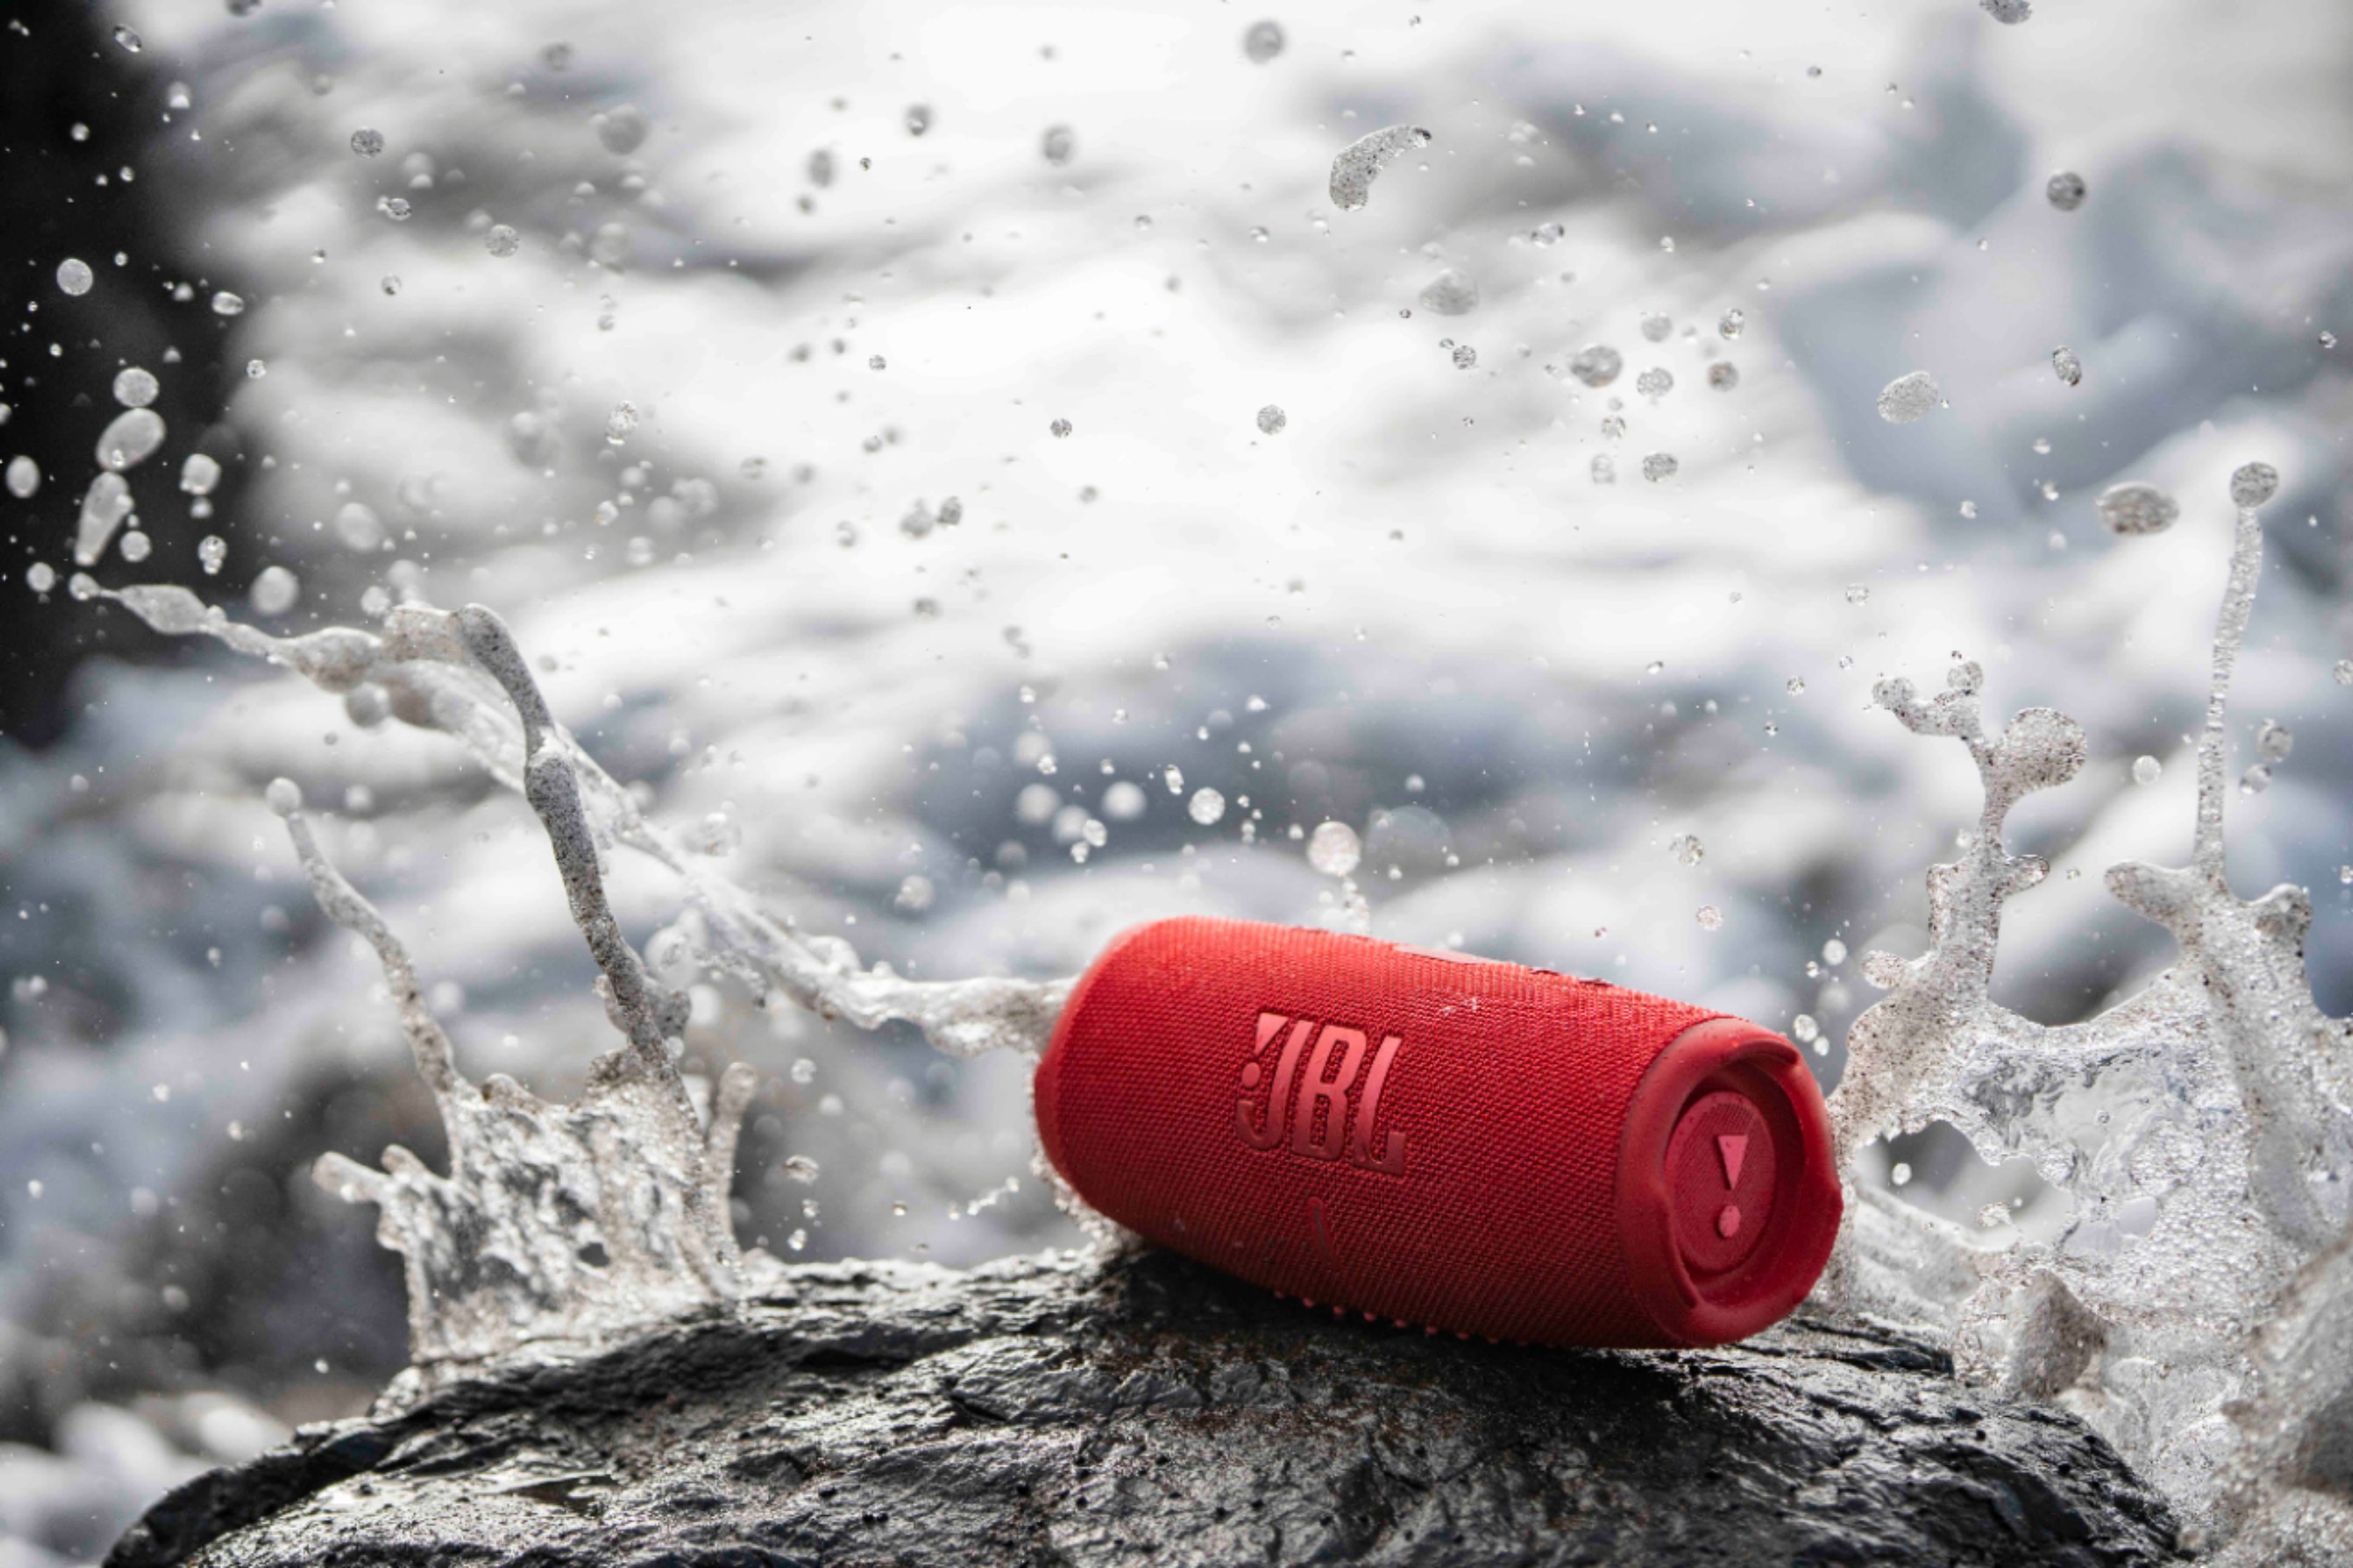 Best Buy: JBL Flip 5 Portable Bluetooth Speaker Red JBLFLIP5REDAM